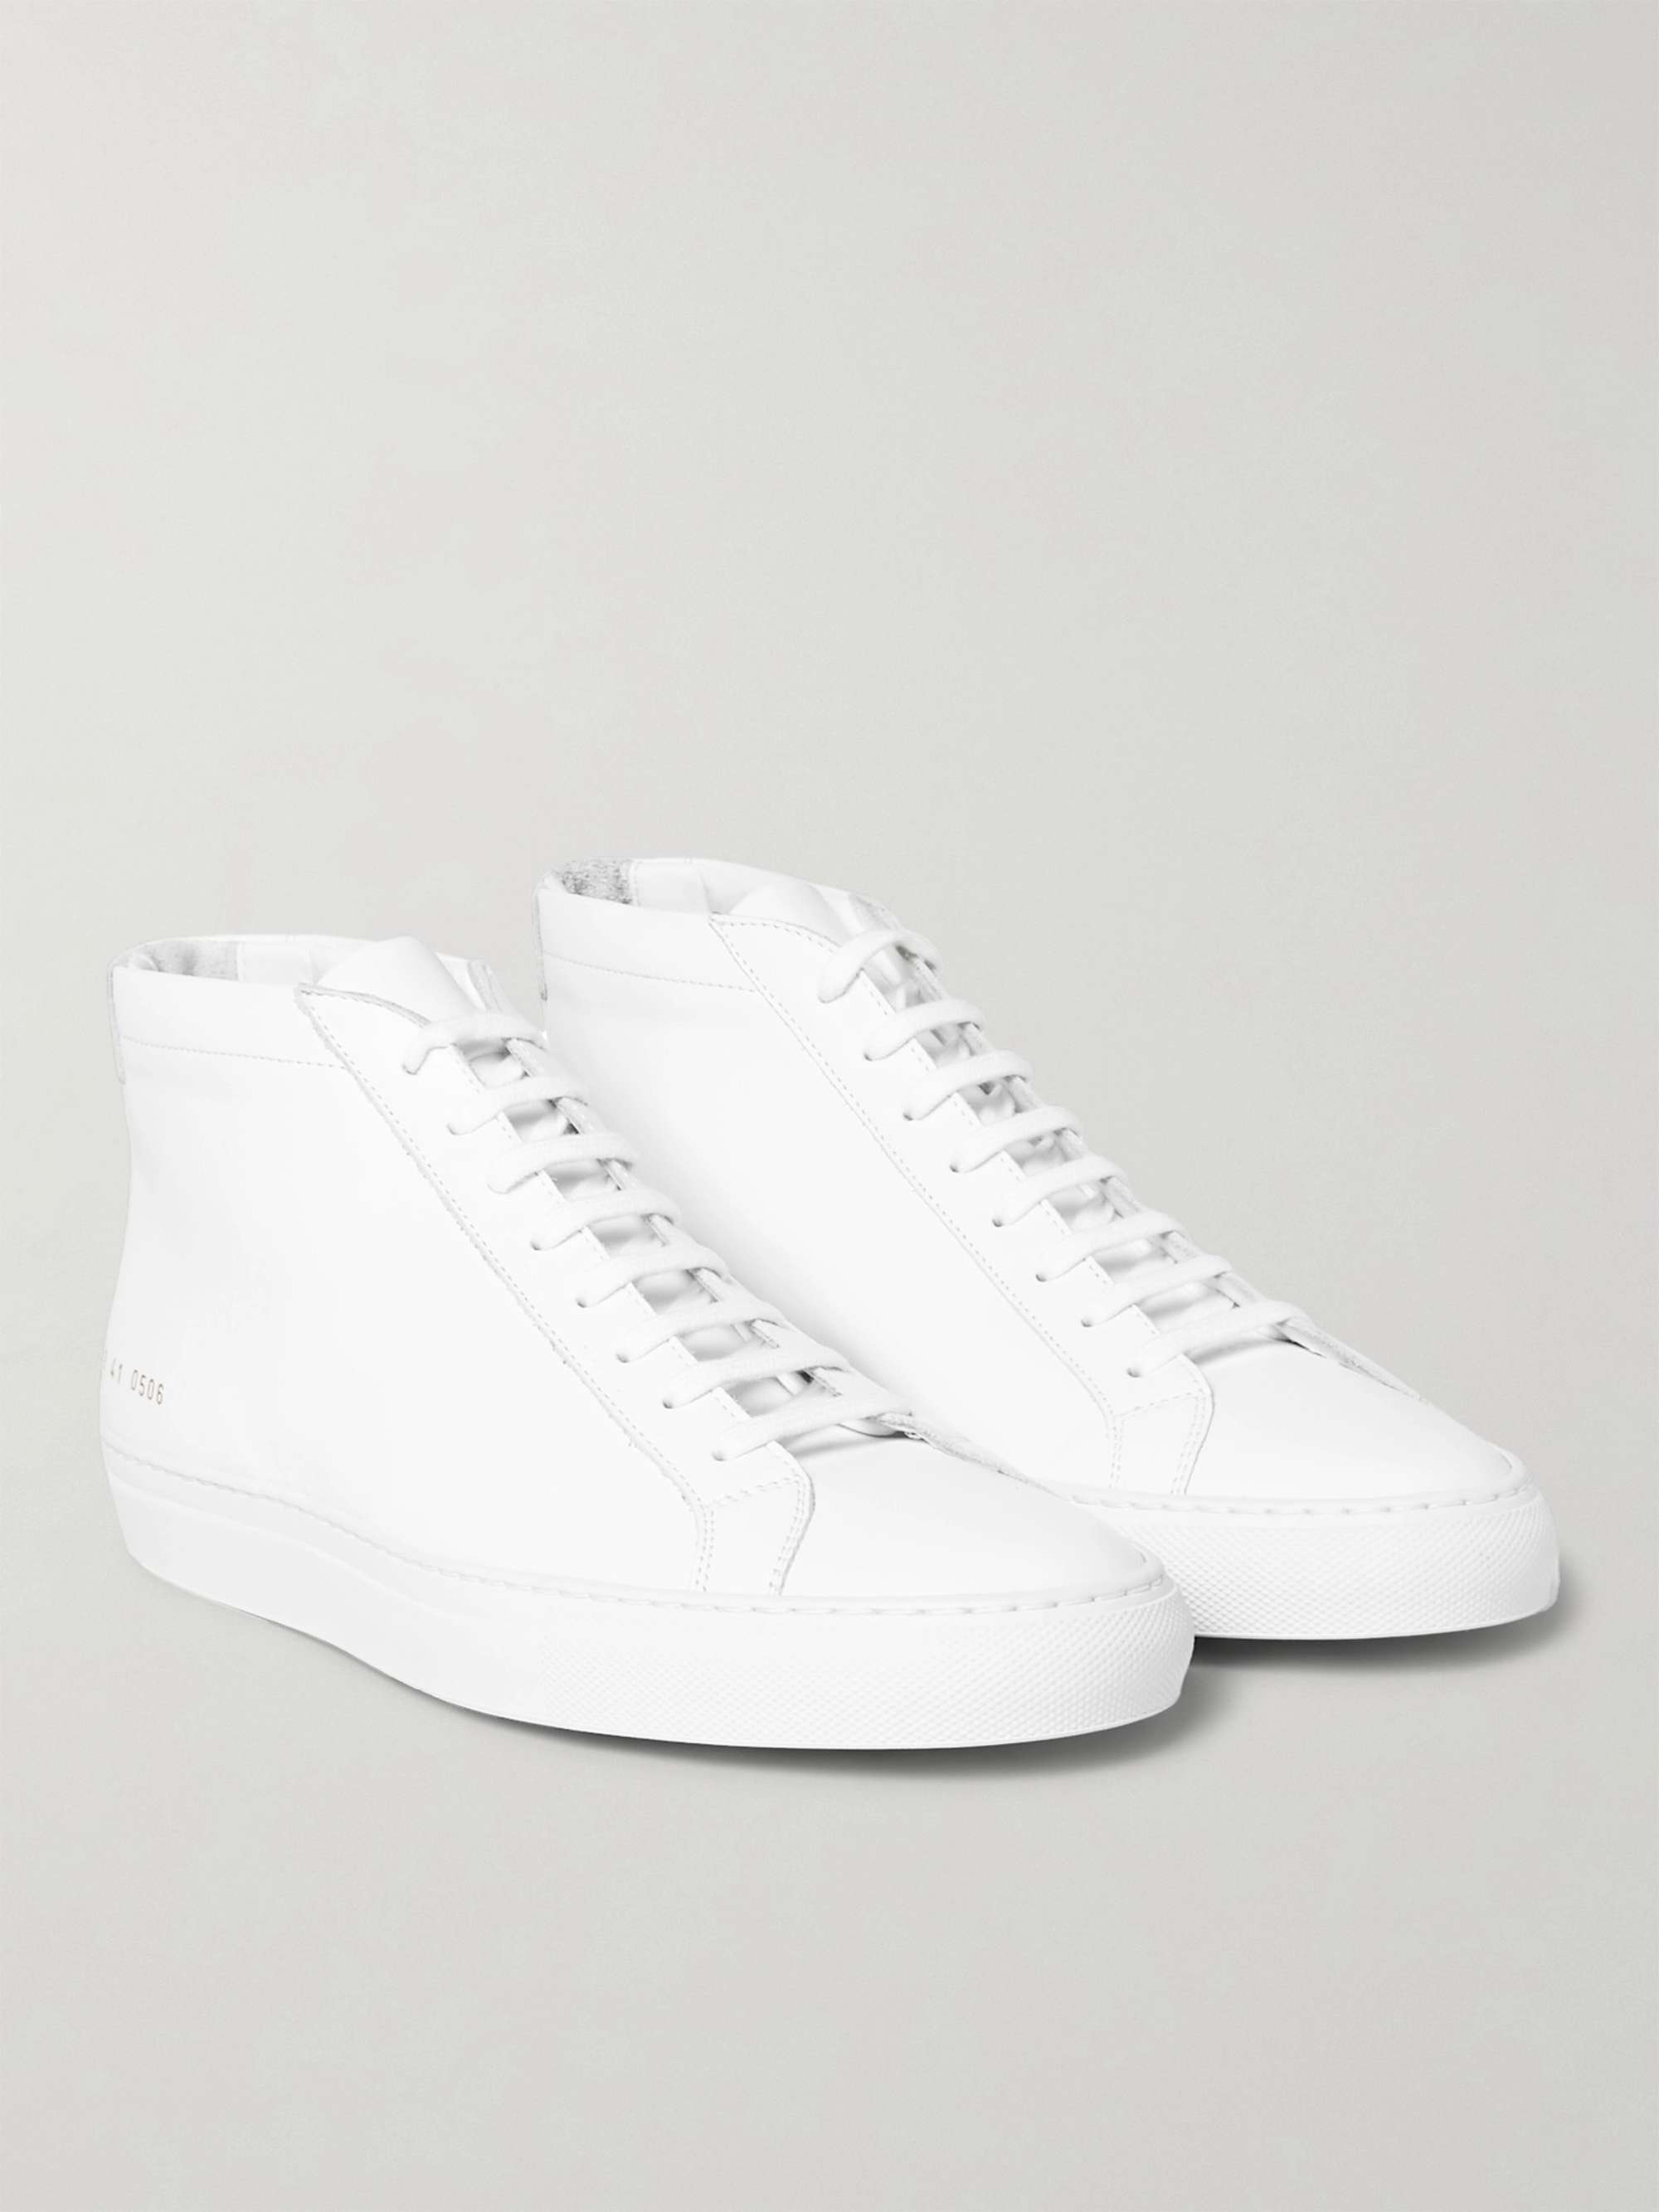 Uensartet Kontoret Vie COMMON PROJECTS Original Achilles Leather High-Top Sneakers for Men | MR  PORTER